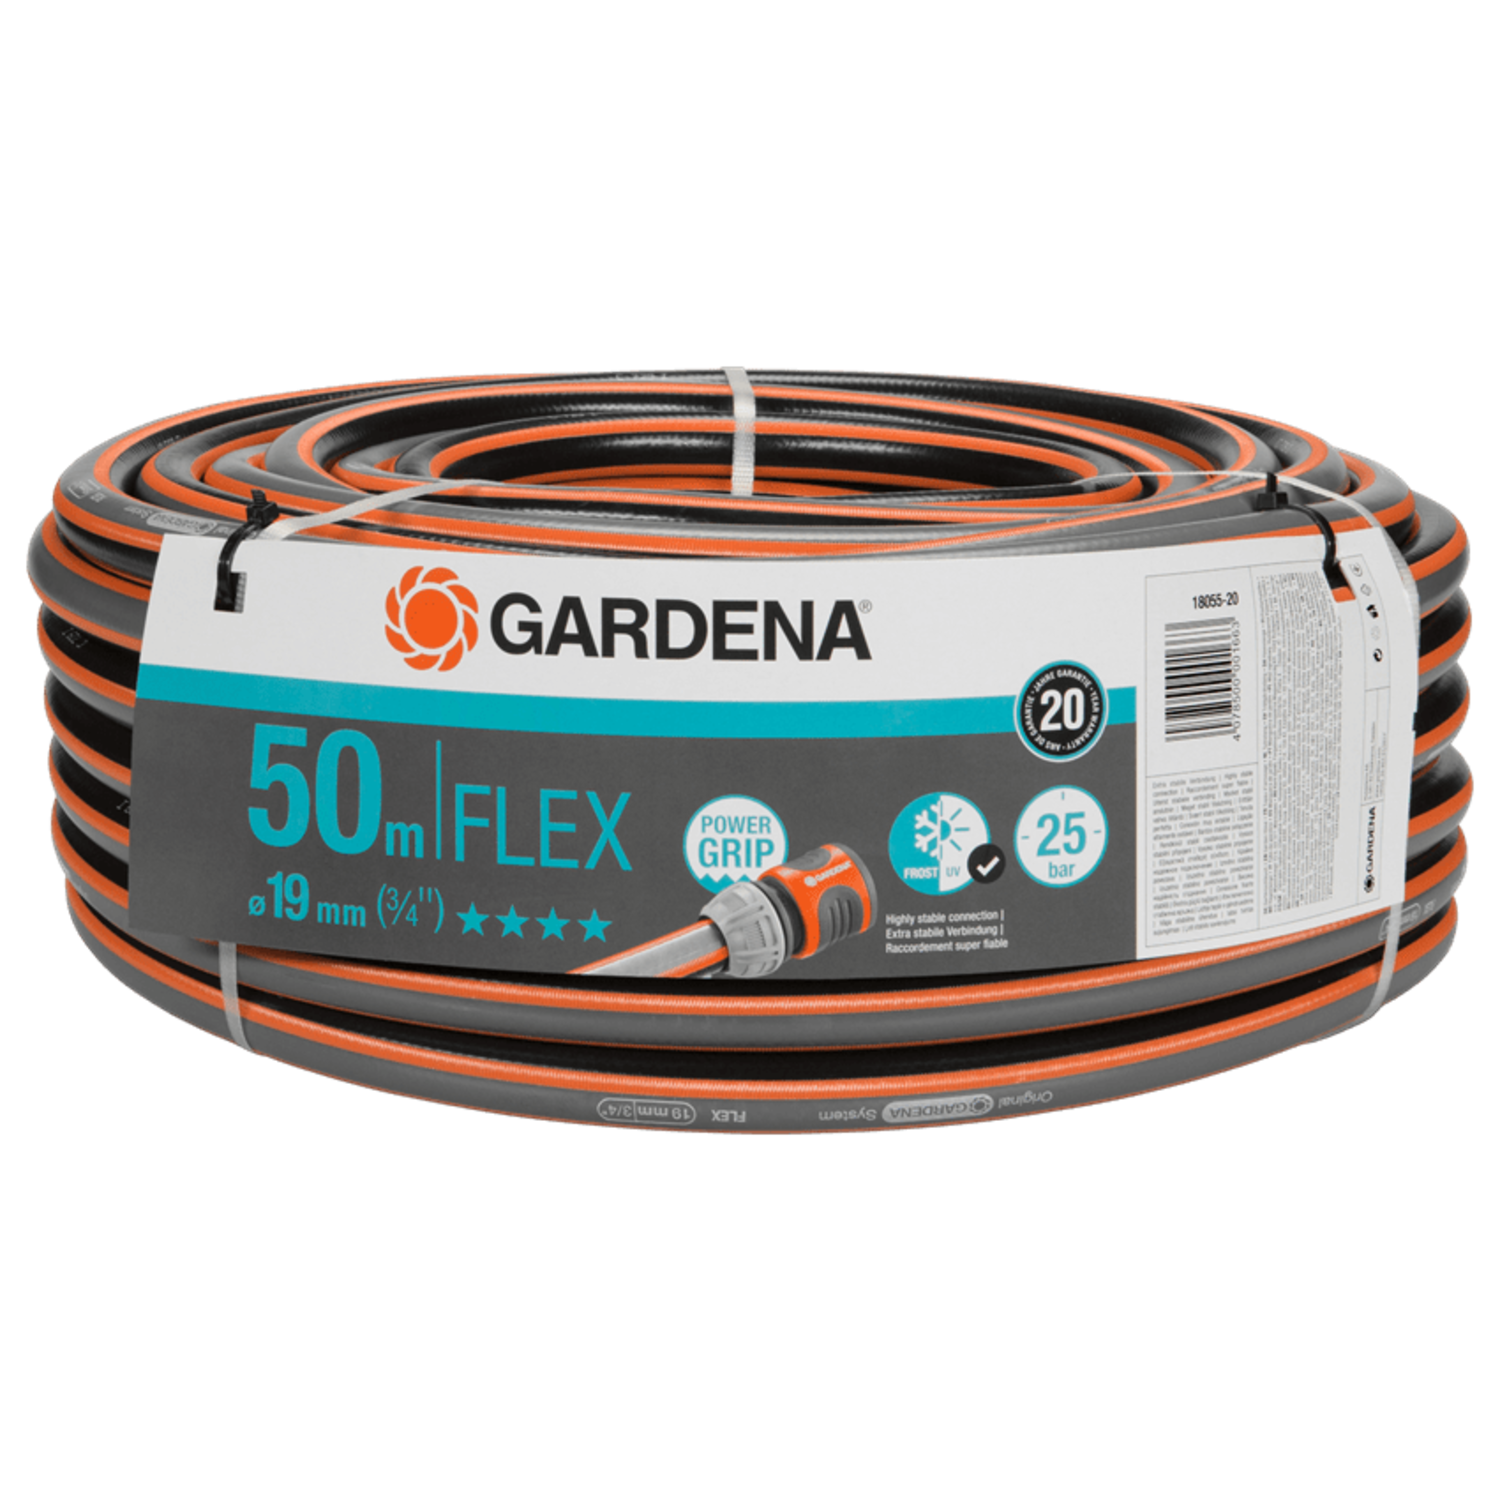 Medisch wangedrag borst draai Gardena Tuinslang Comfort Flex 19 mm (3/4") 50 m1 - HoukemaTools